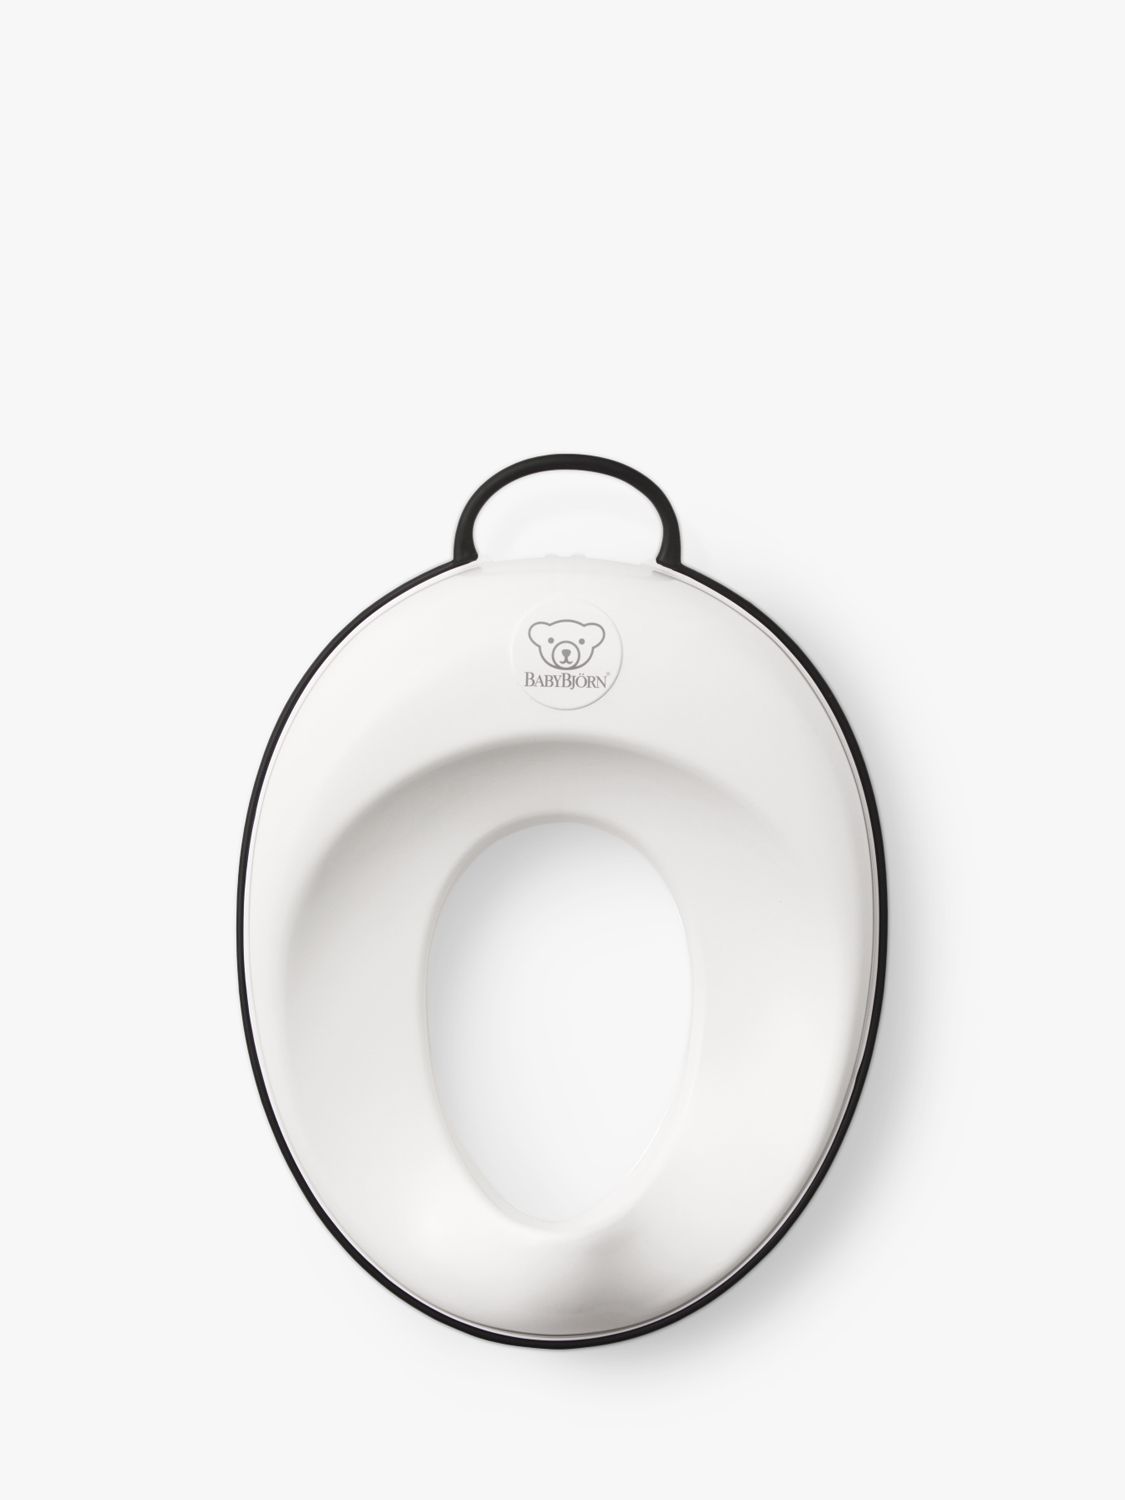 Image of BabyBjrn Toilet Trainer Seat WhiteBlack Trim